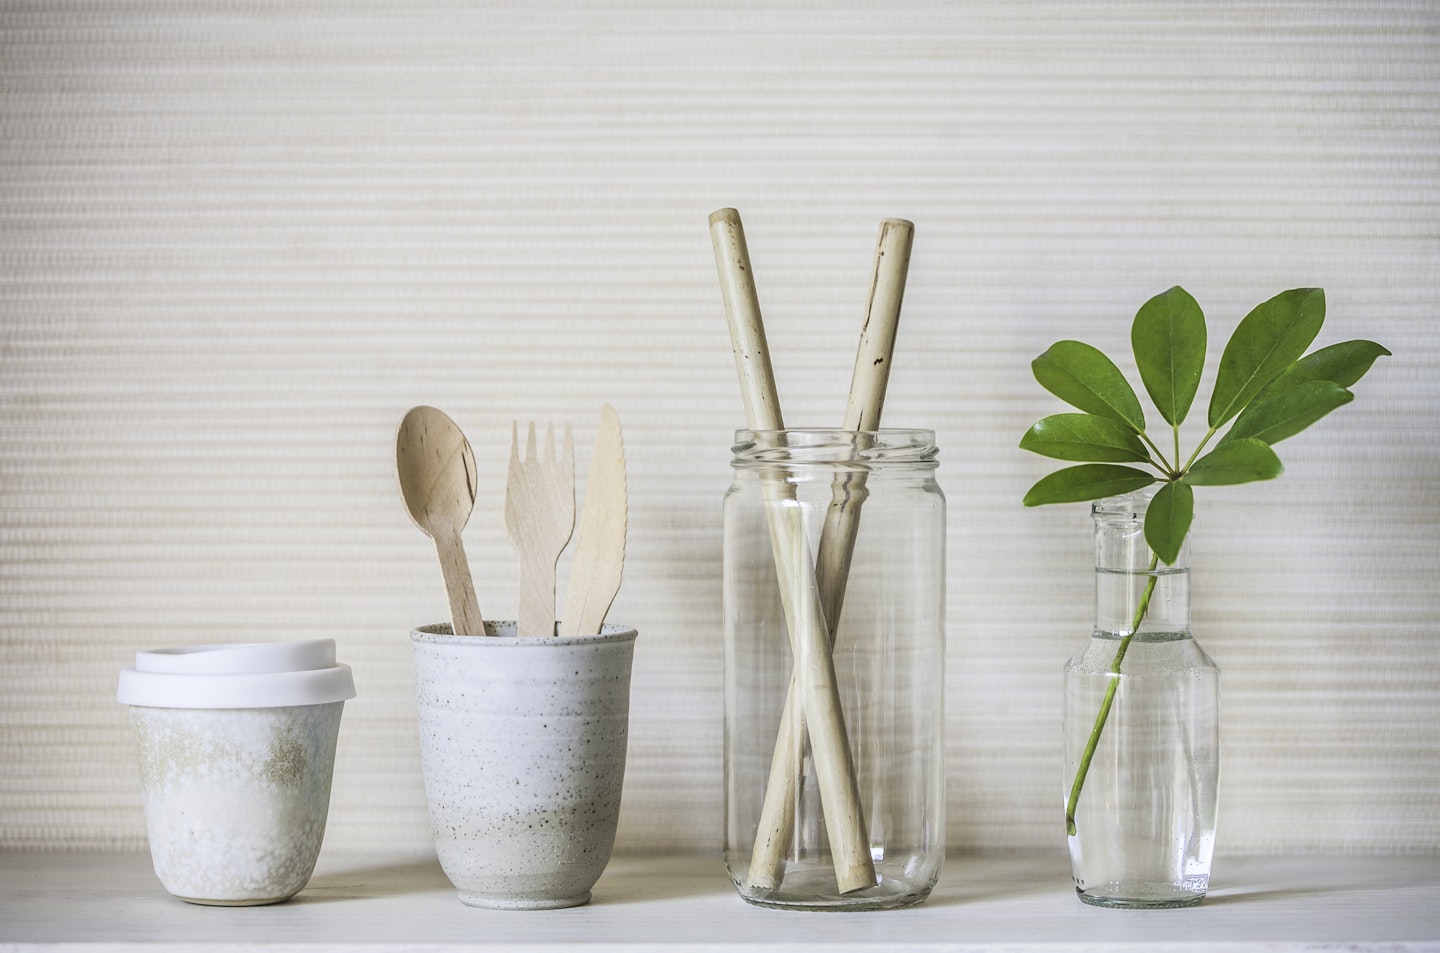 Sustainable bamboo cutlery